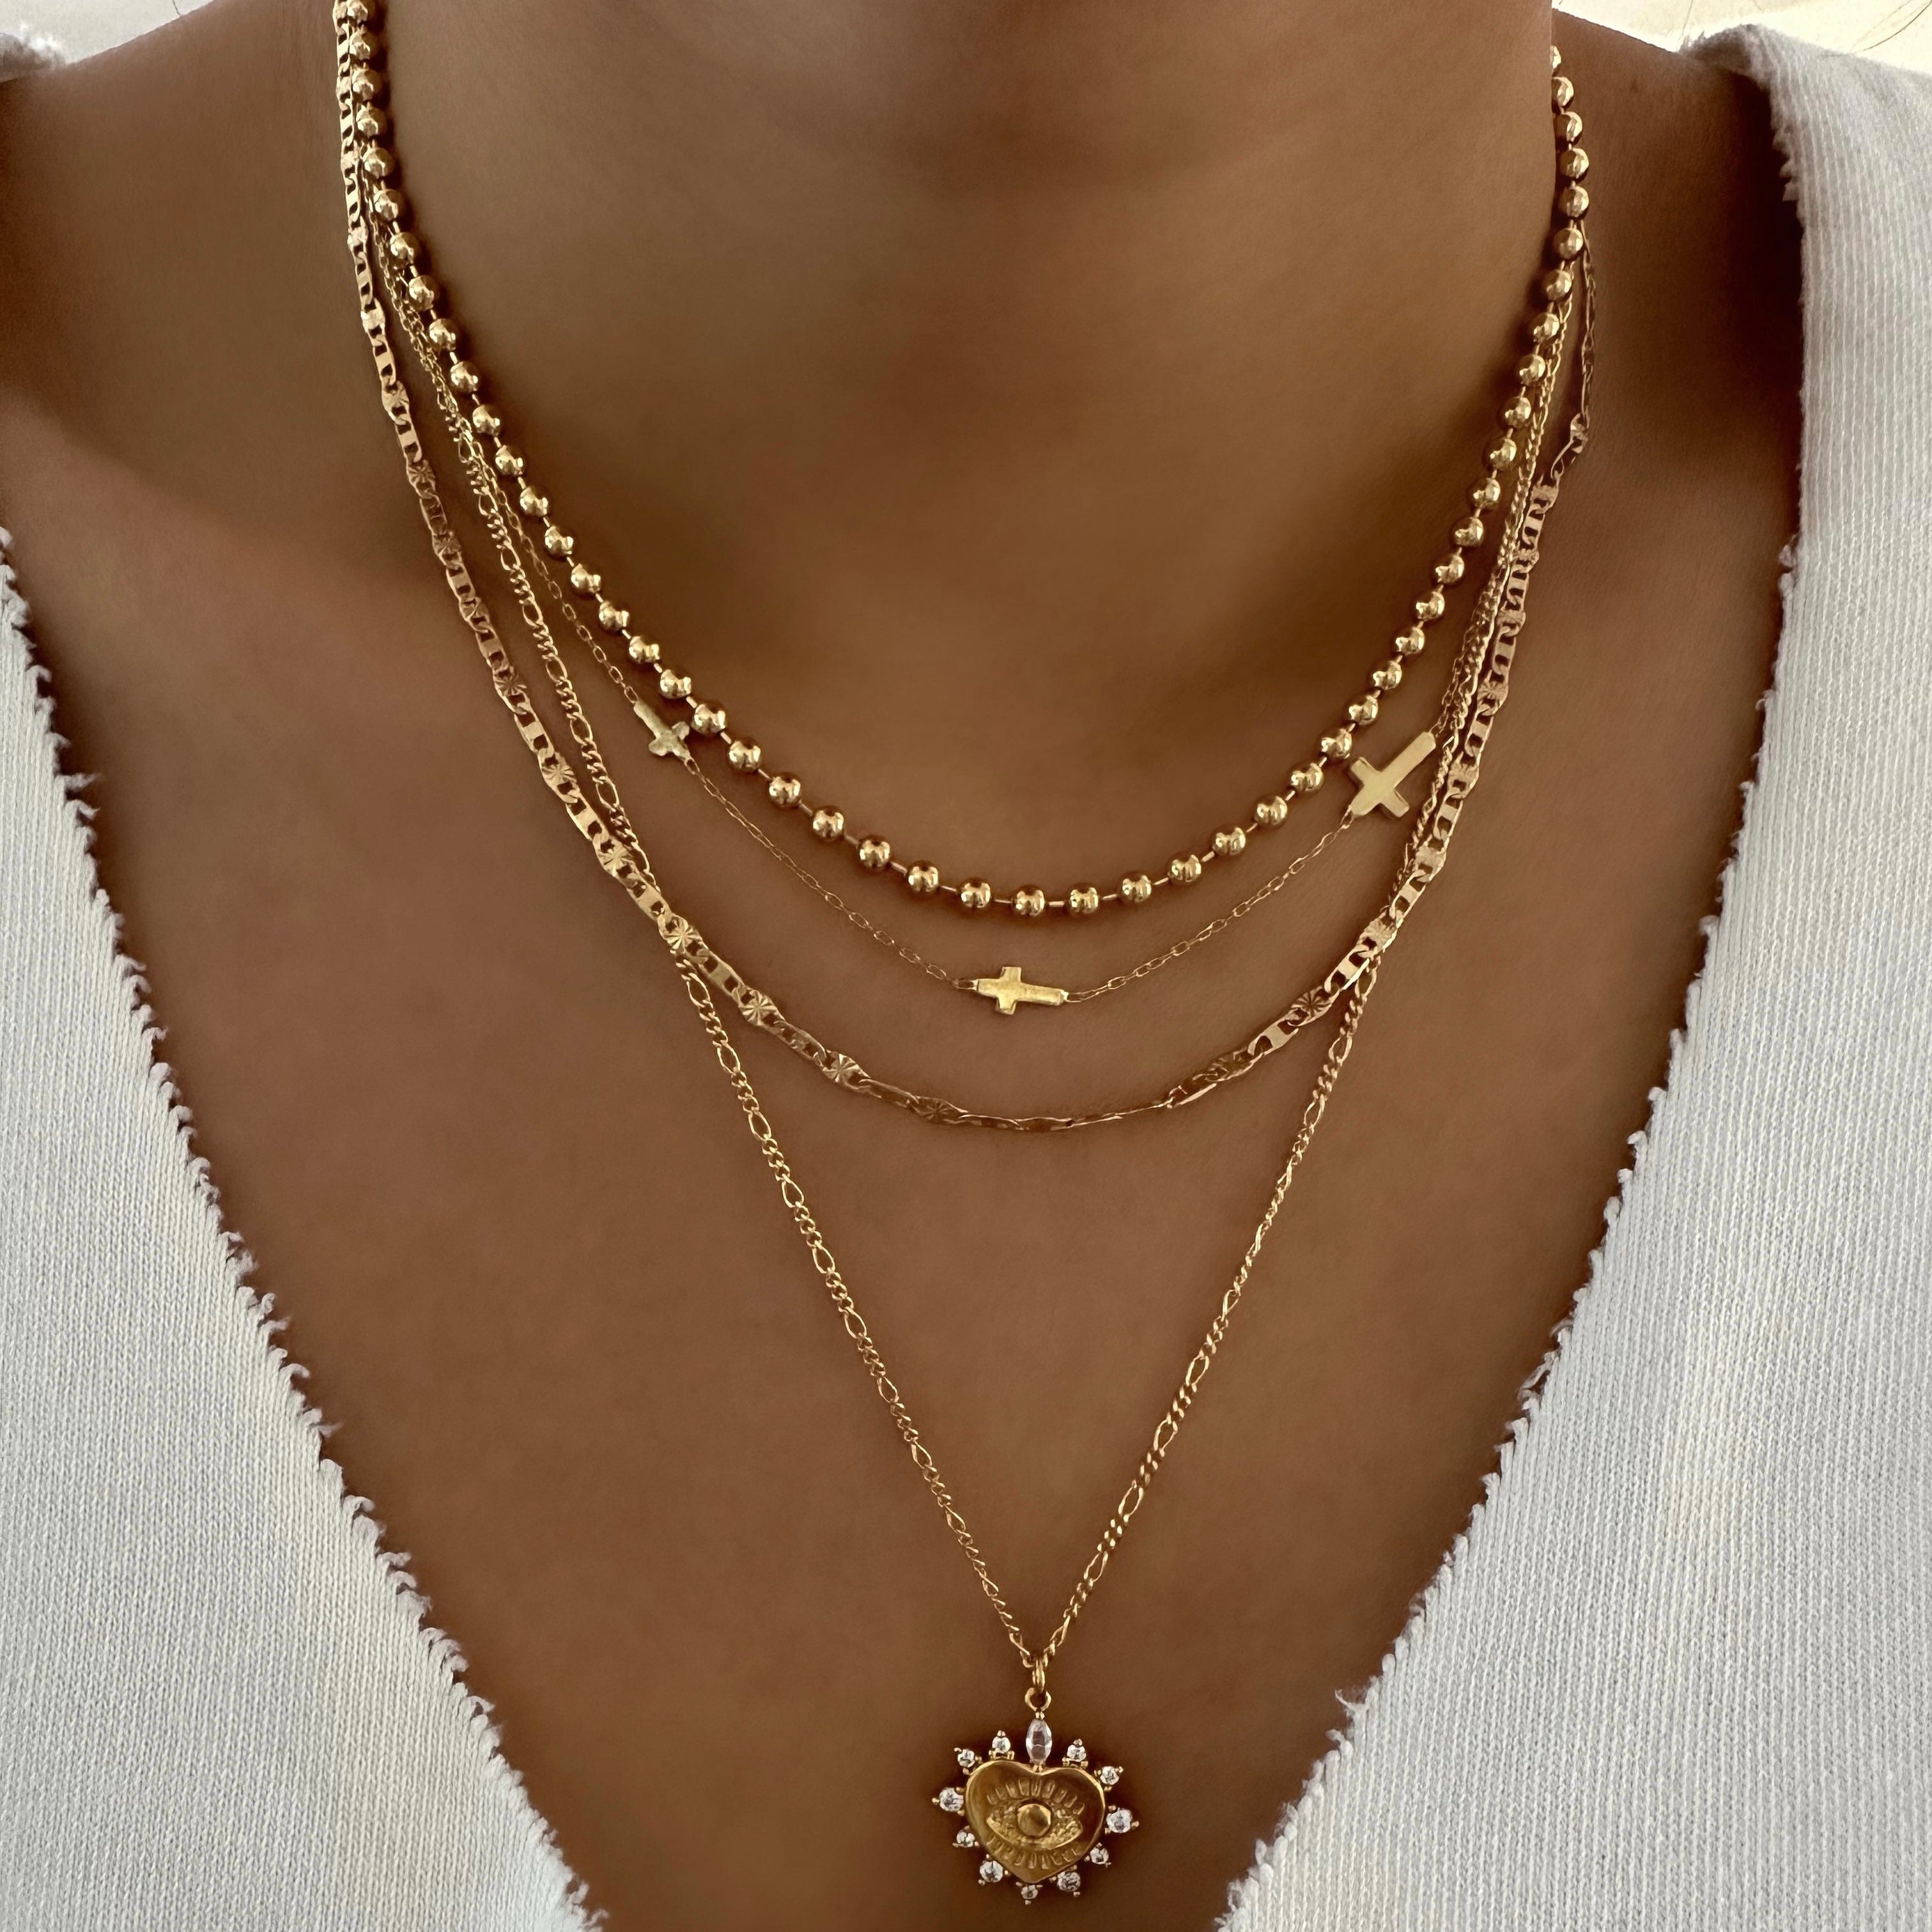 LE sensor necklace Zola Necklace